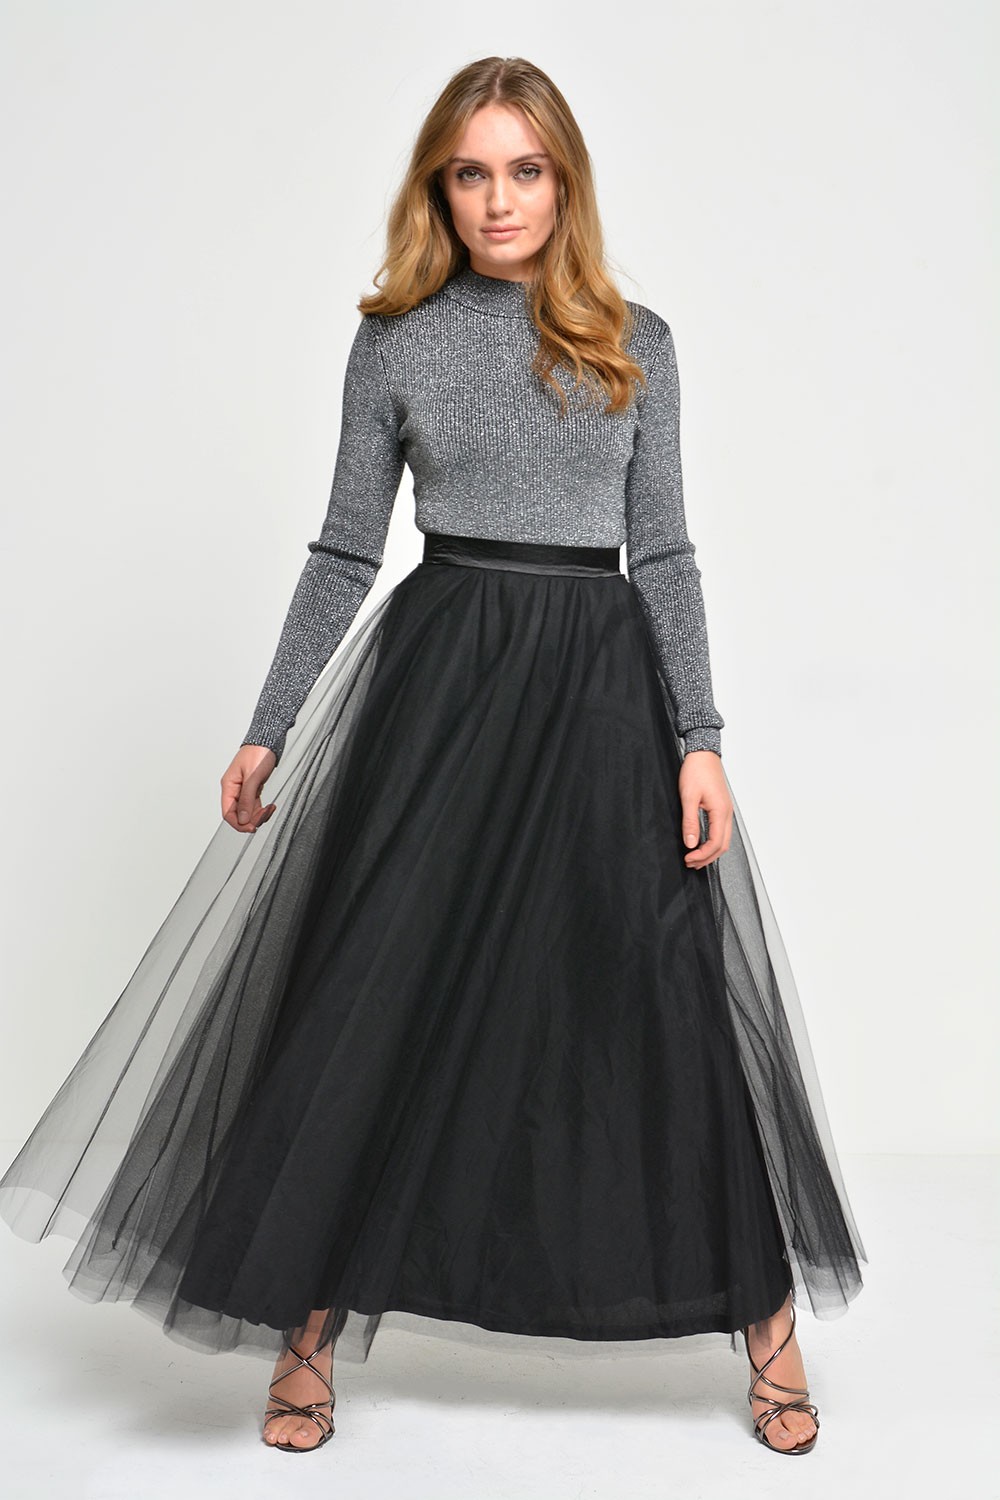 Black Pleated Skirt Sexy Midi Tulle Skirt High Waist Full Lining Adult My Xxx Hot Girl 3212